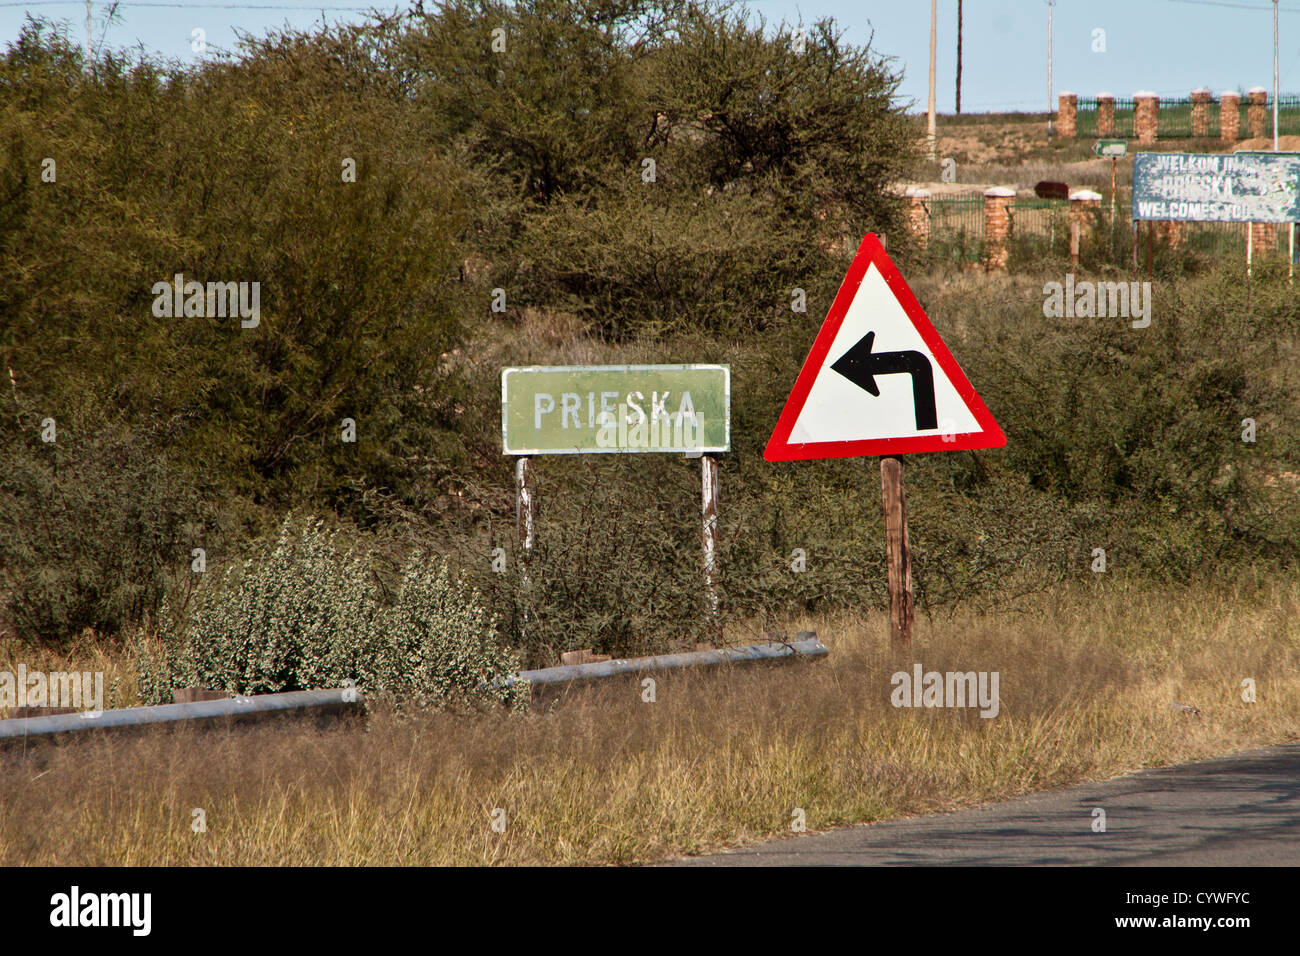 Prieska road sign Stock Photo